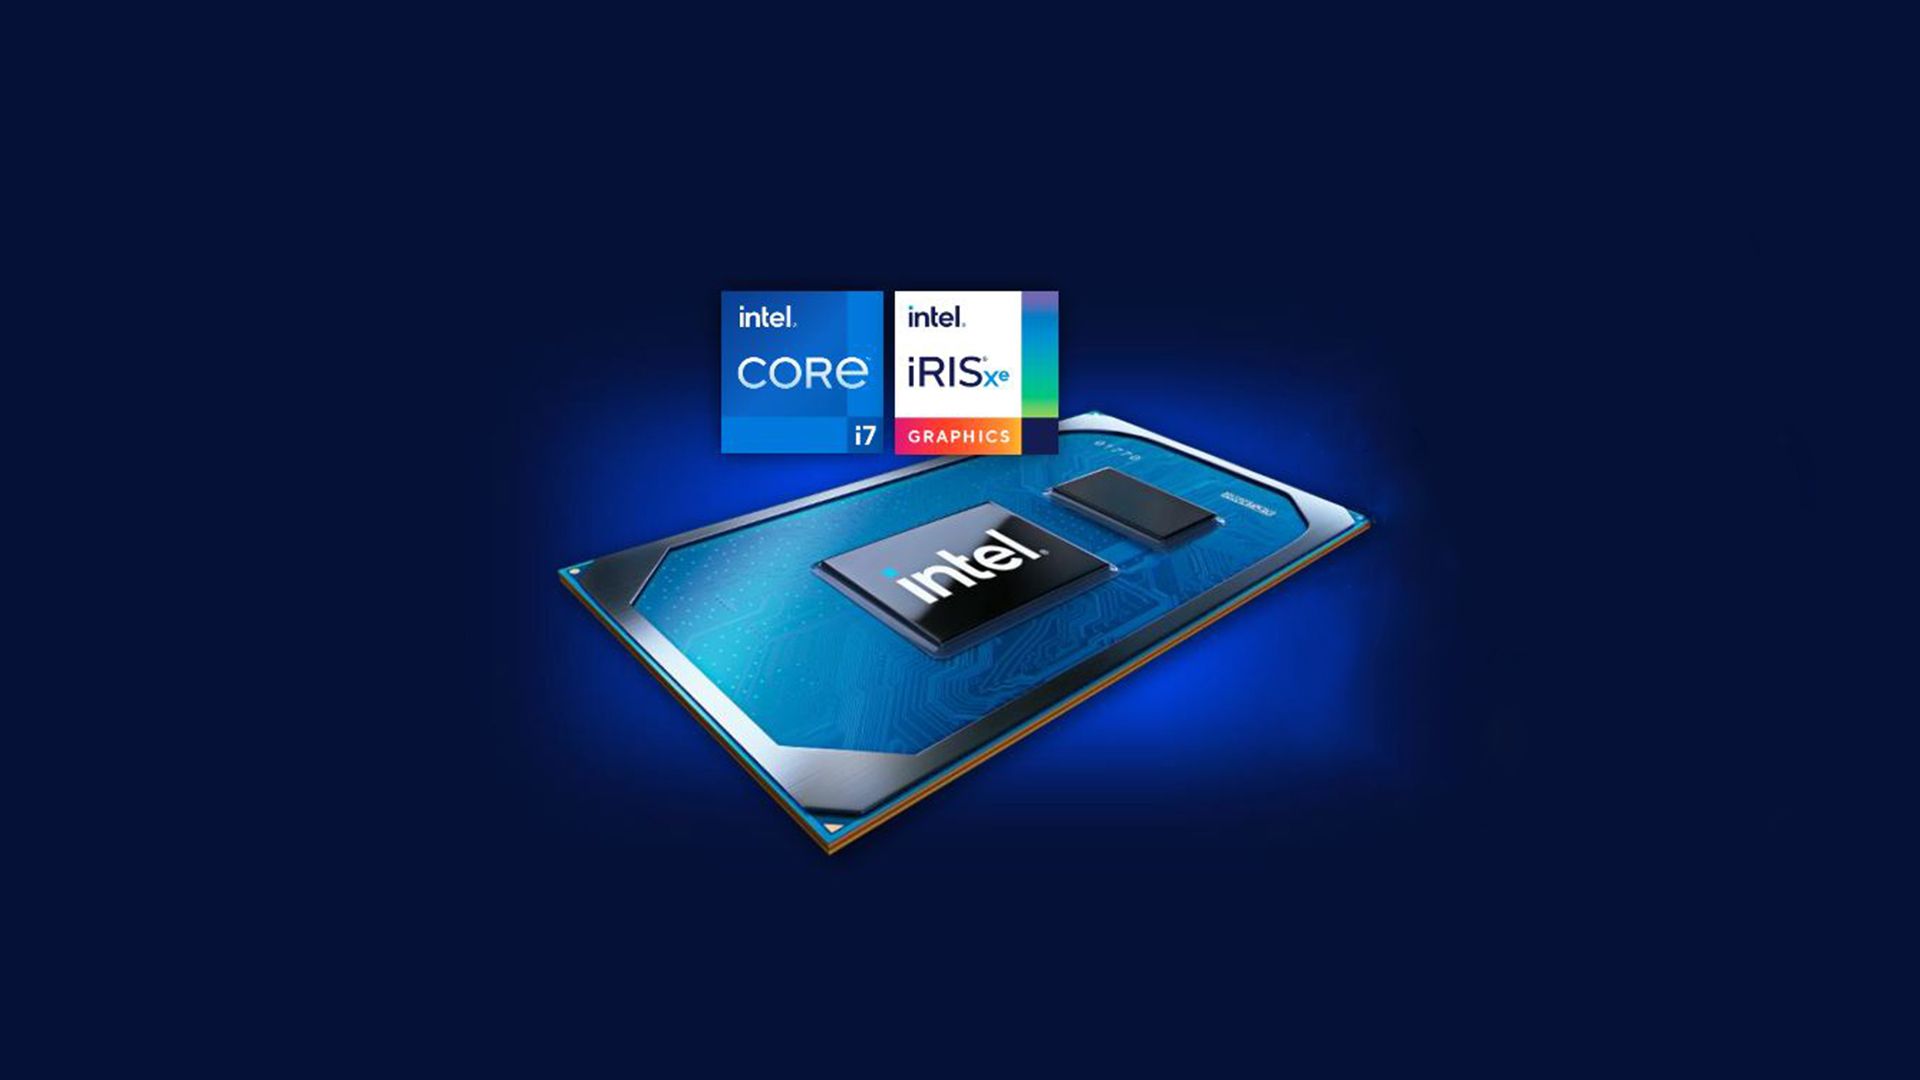 Процессор iris xe graphics. Видеокарты Intel Graphics xe. Интел Ирис Хе Графикс. Core i5 Intel Iris. Графический процессор Intel Iris xe Graphics.